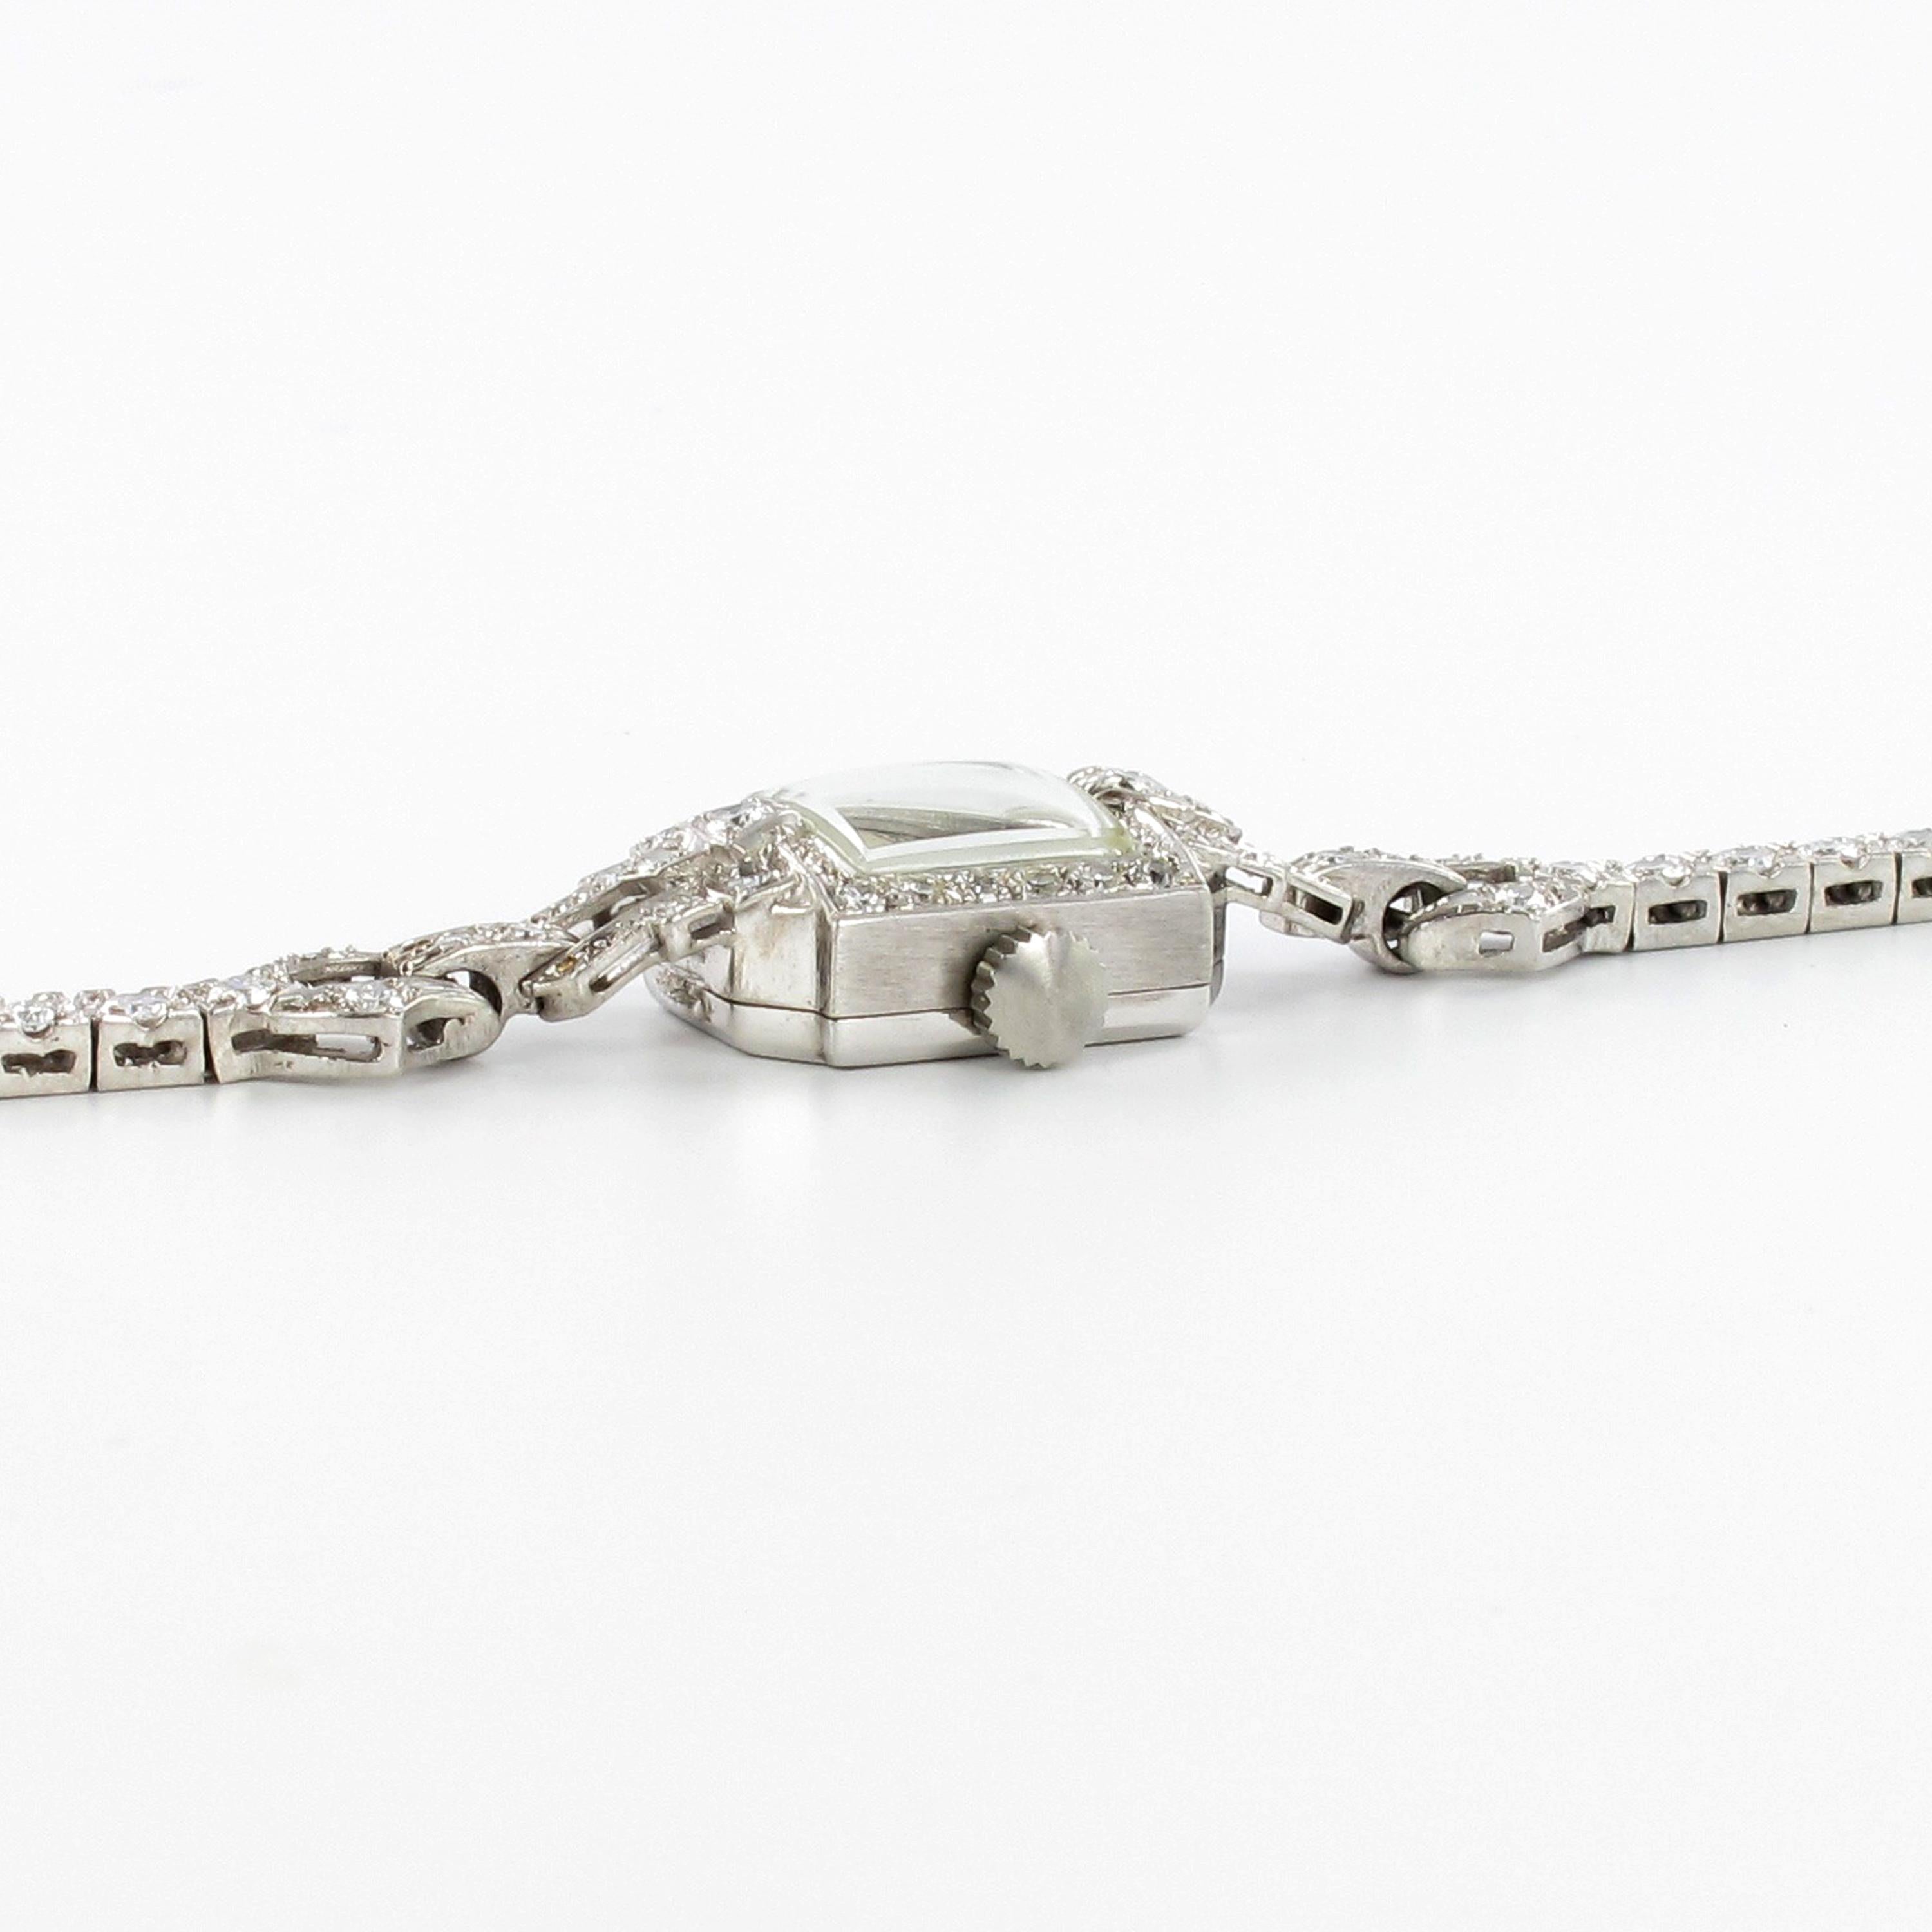 Brilliant Cut Beautiful Art Deco Style Ladies Bracelet Watch with Diamonds in Platinum 950